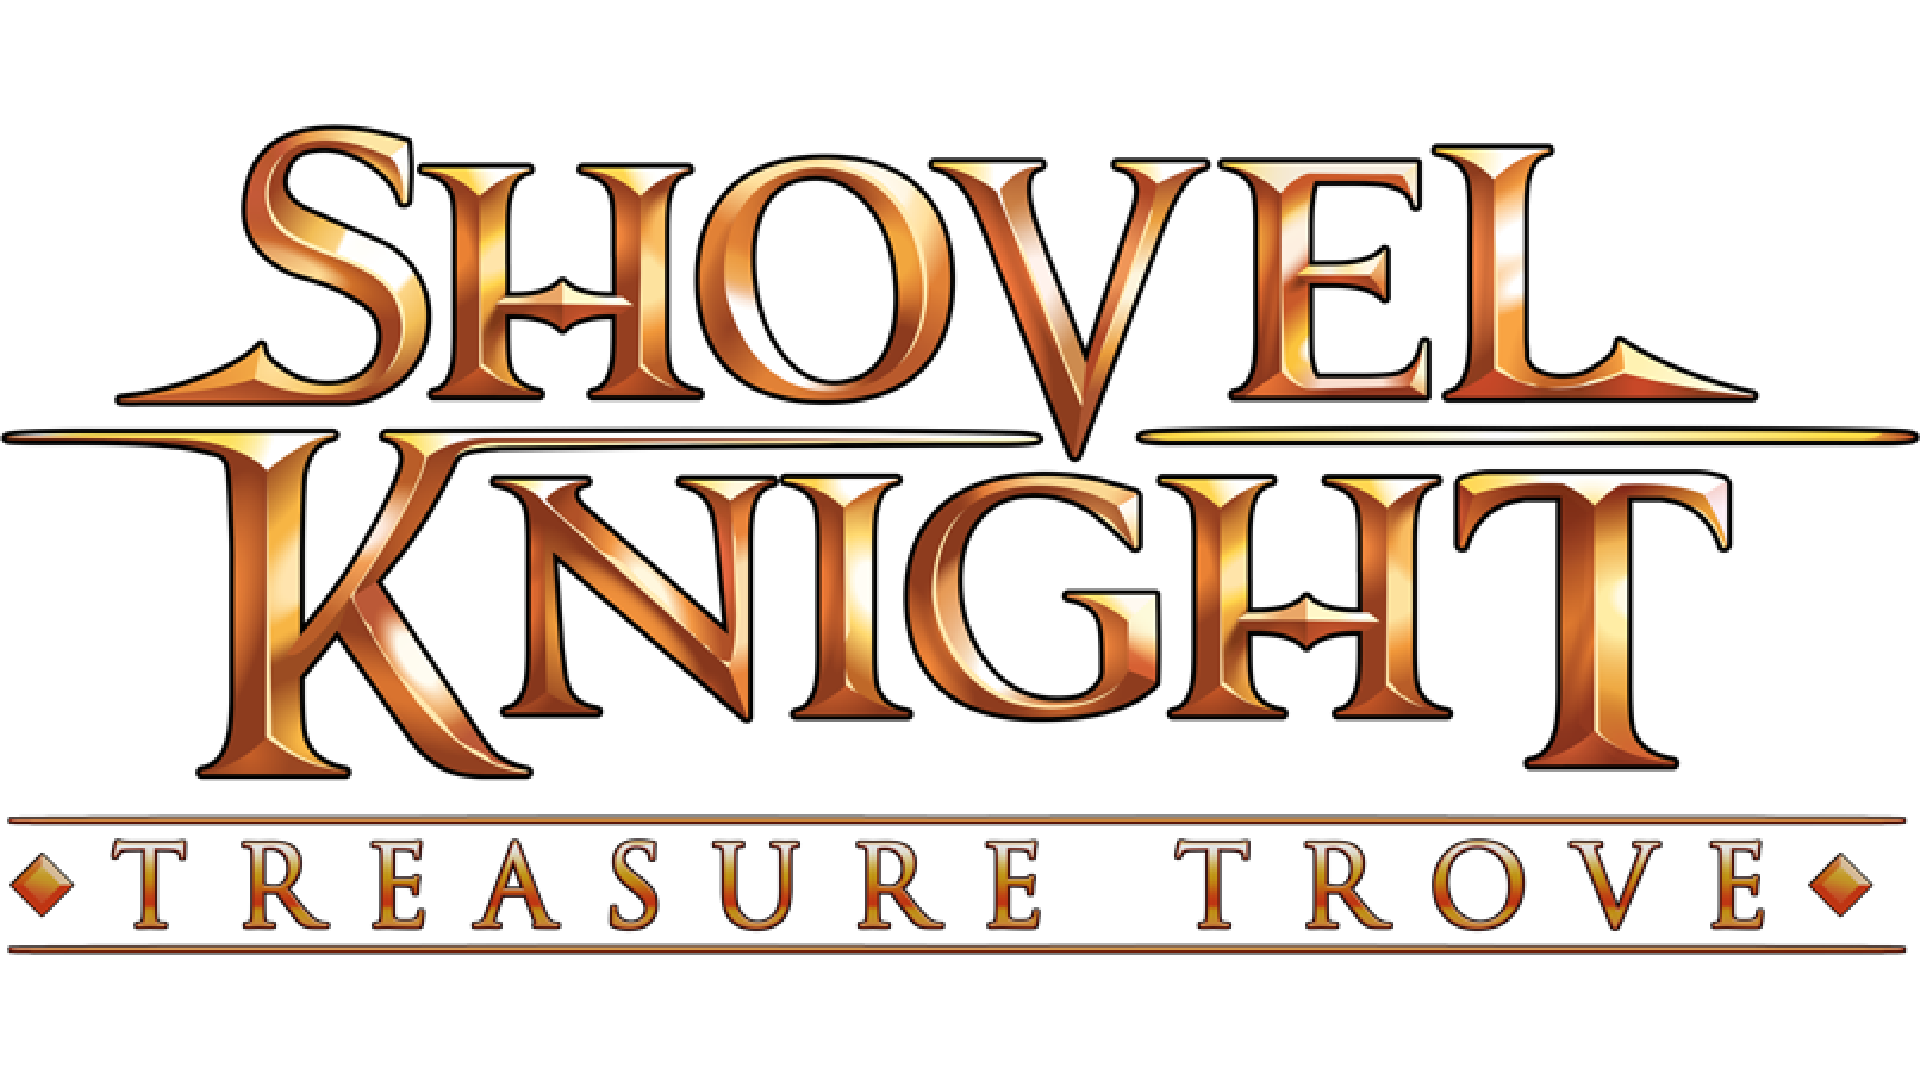 Shovel Knight: Treasure Trove Logo